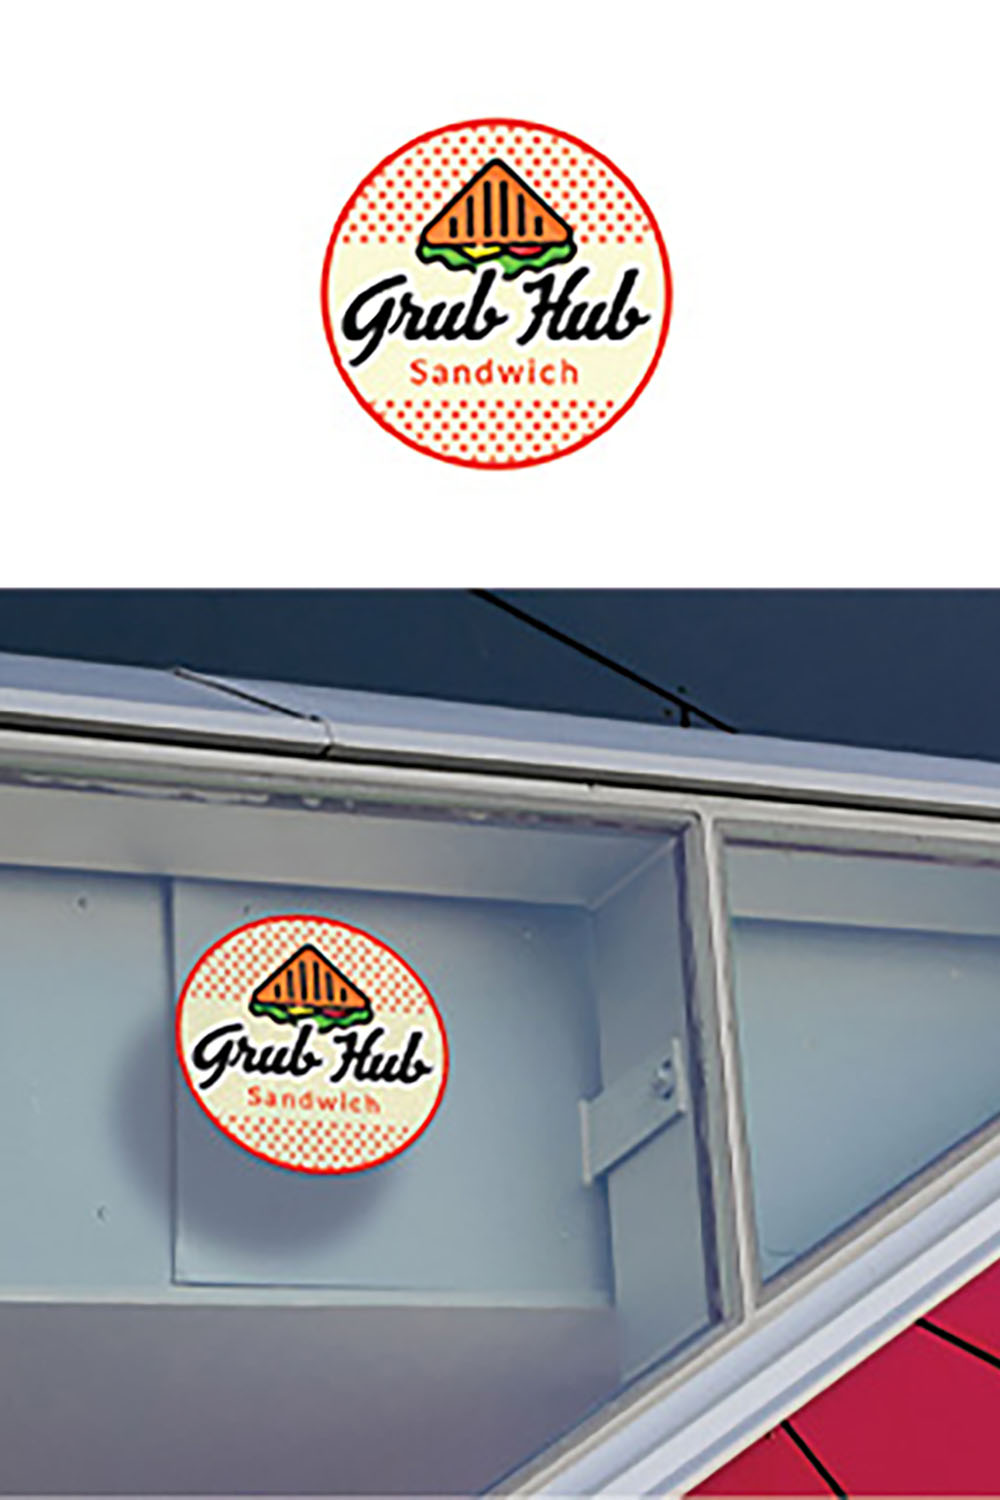 Logo for a restaurant called grub - hub.